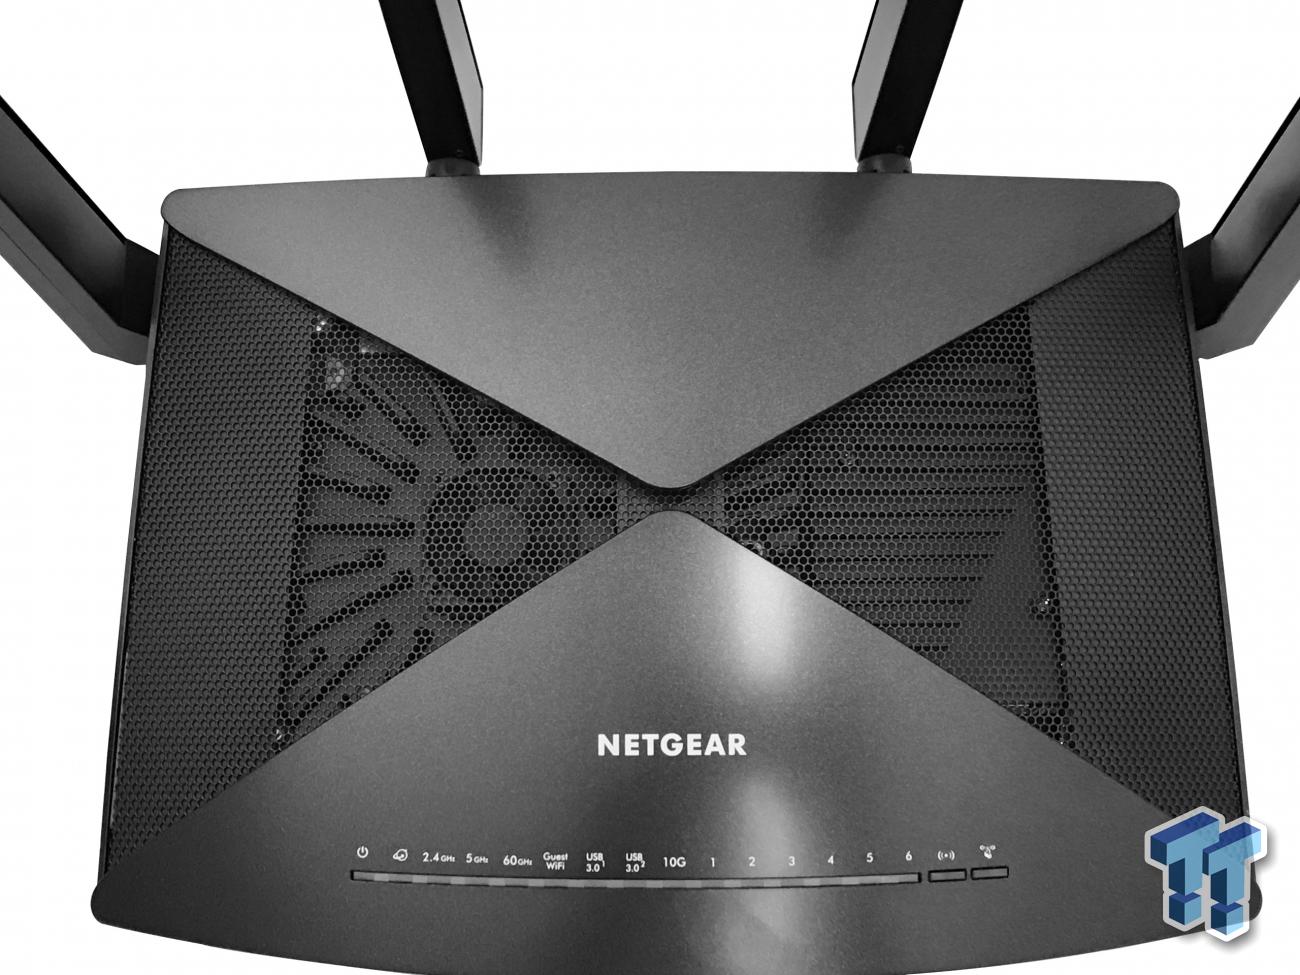 feudale tidligere søster NETGEAR Nighthawk X10 AD7200 Smart Wi-Fi Router Review